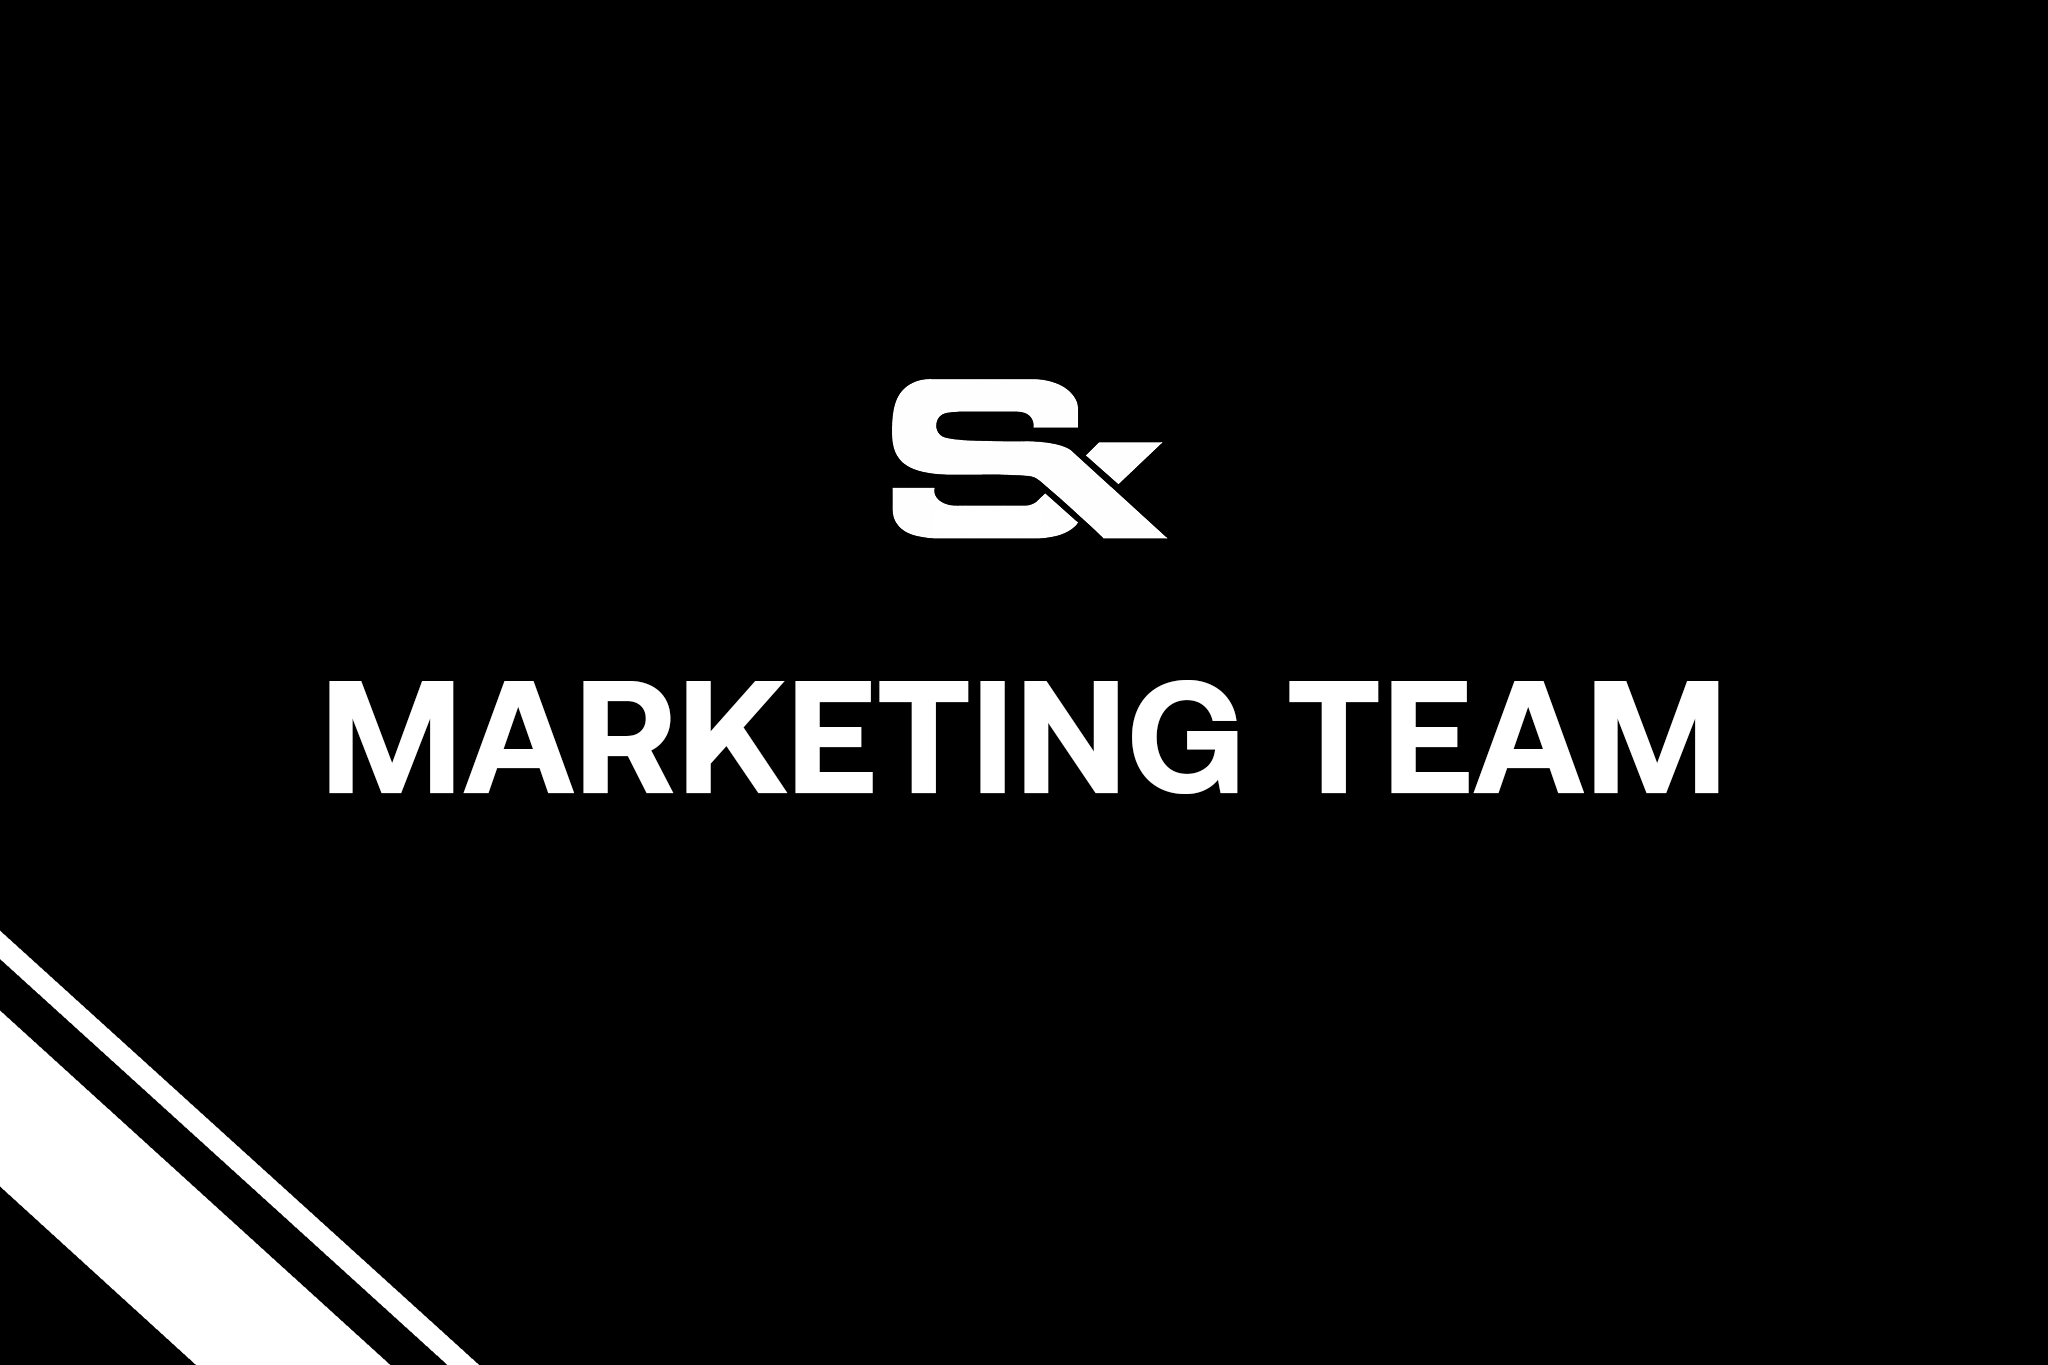 1. Meet The Marketing Team